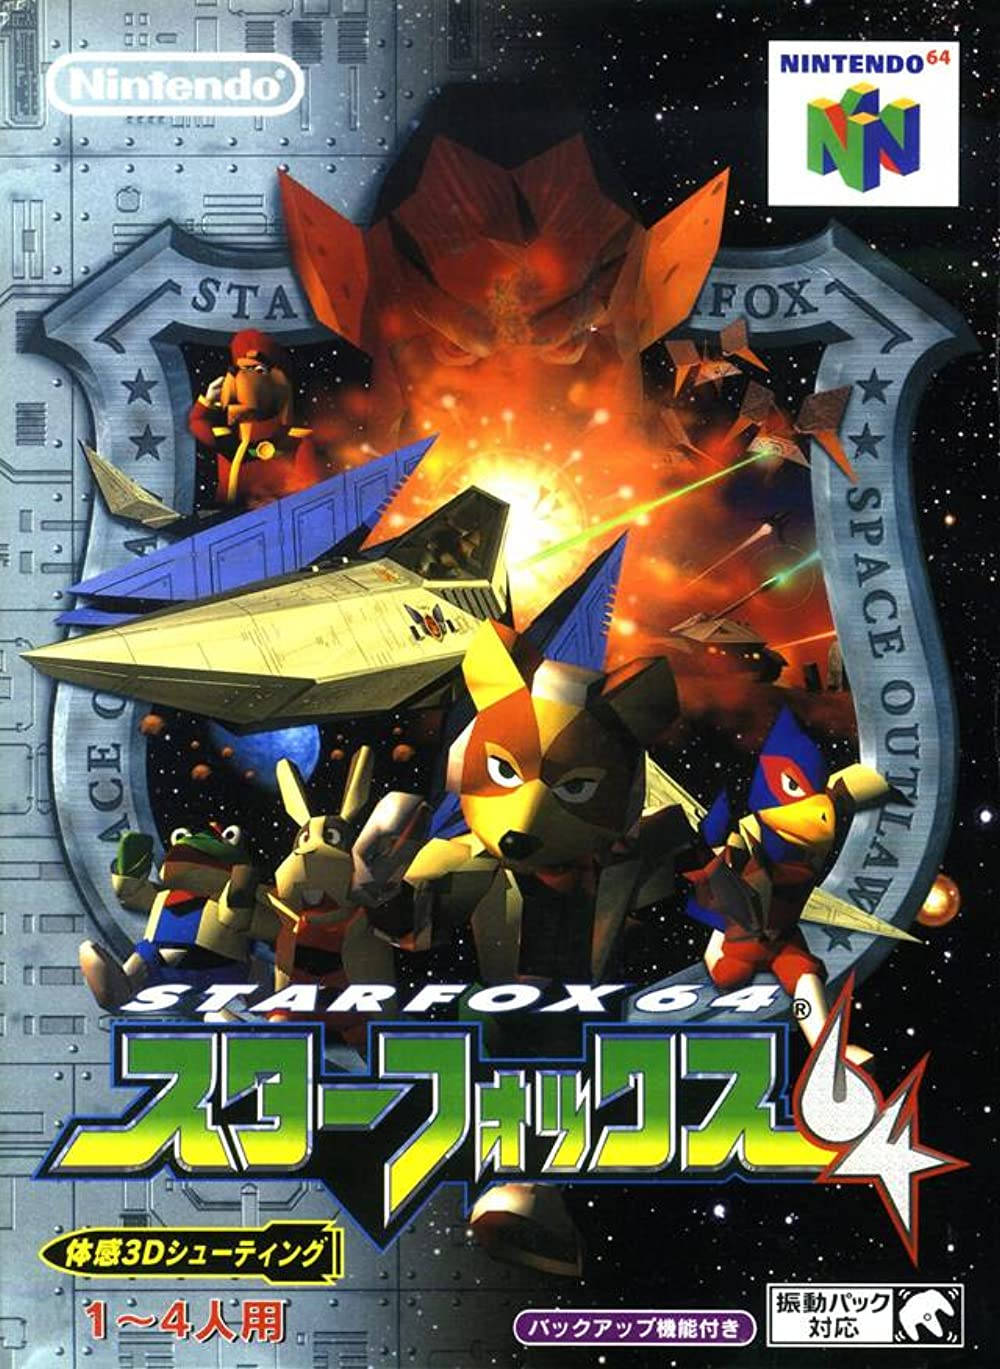 Star Fox 64 Game Poster Wallpaper